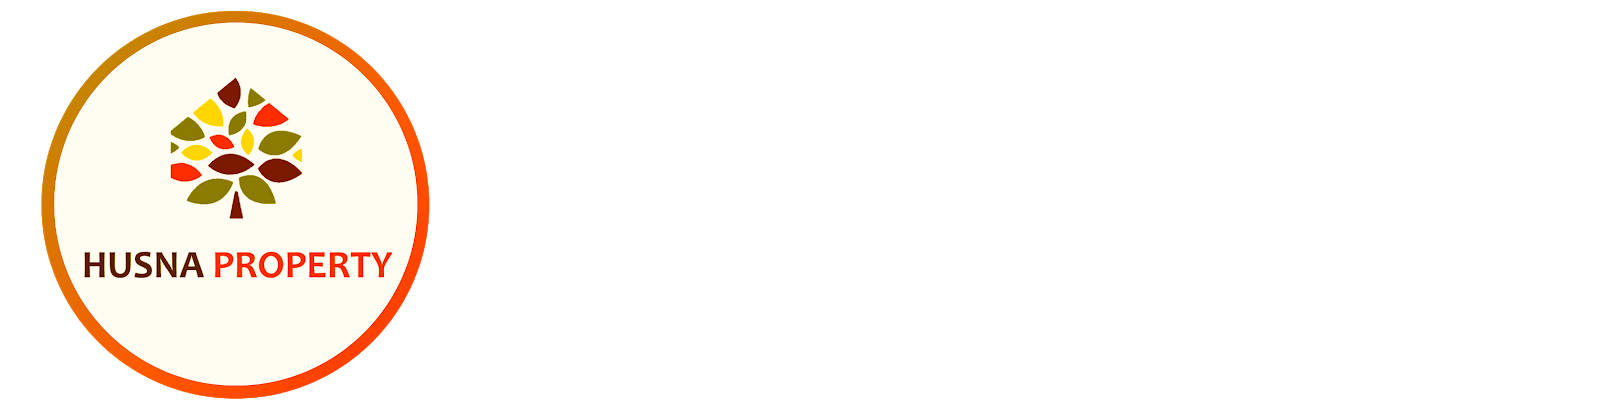 Husna Property